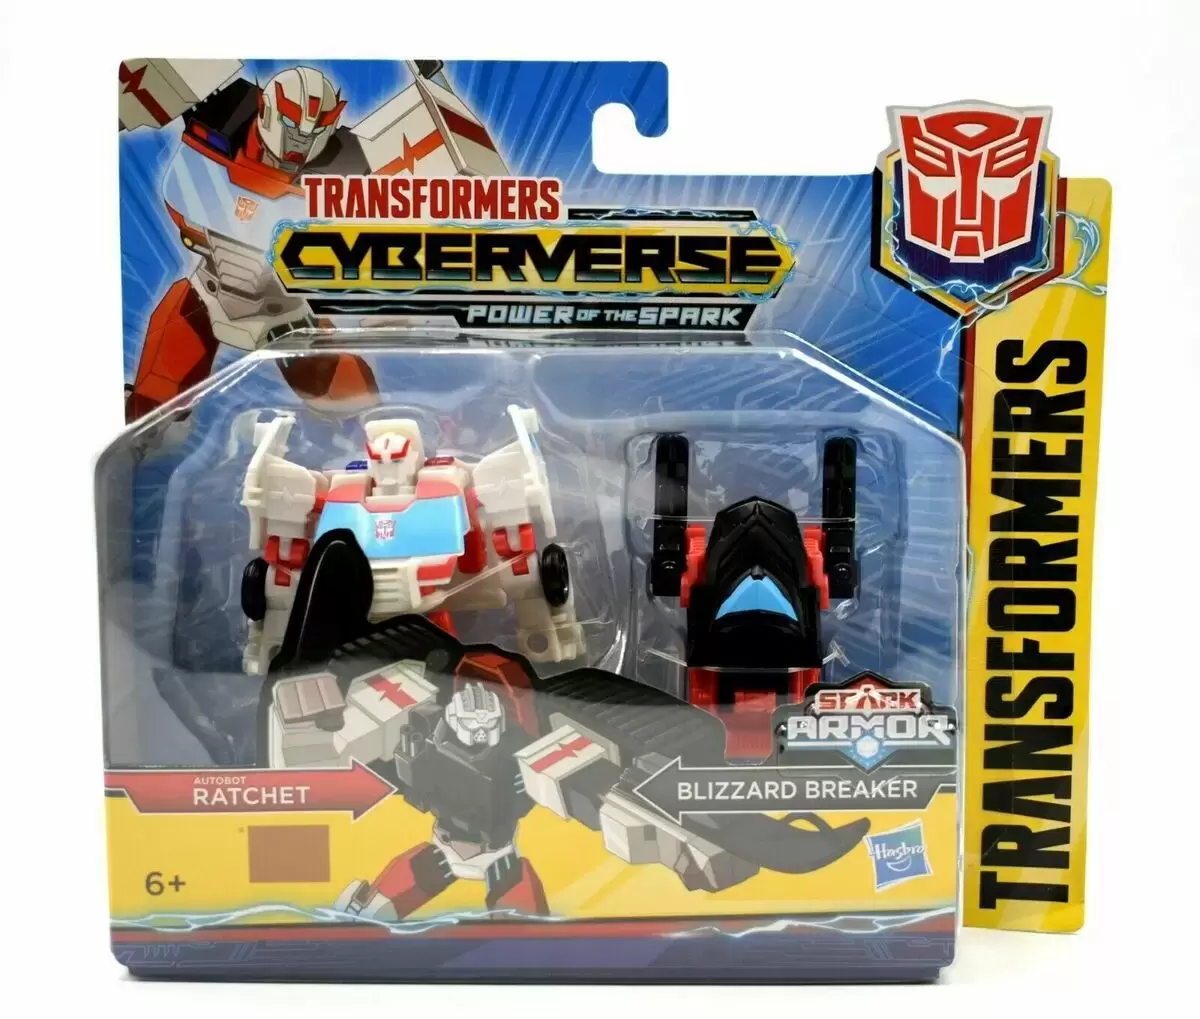 Transformers Cyberverse - Autobot Ratchet & Blizzard Breaker - Cyberverse Power of The Spark